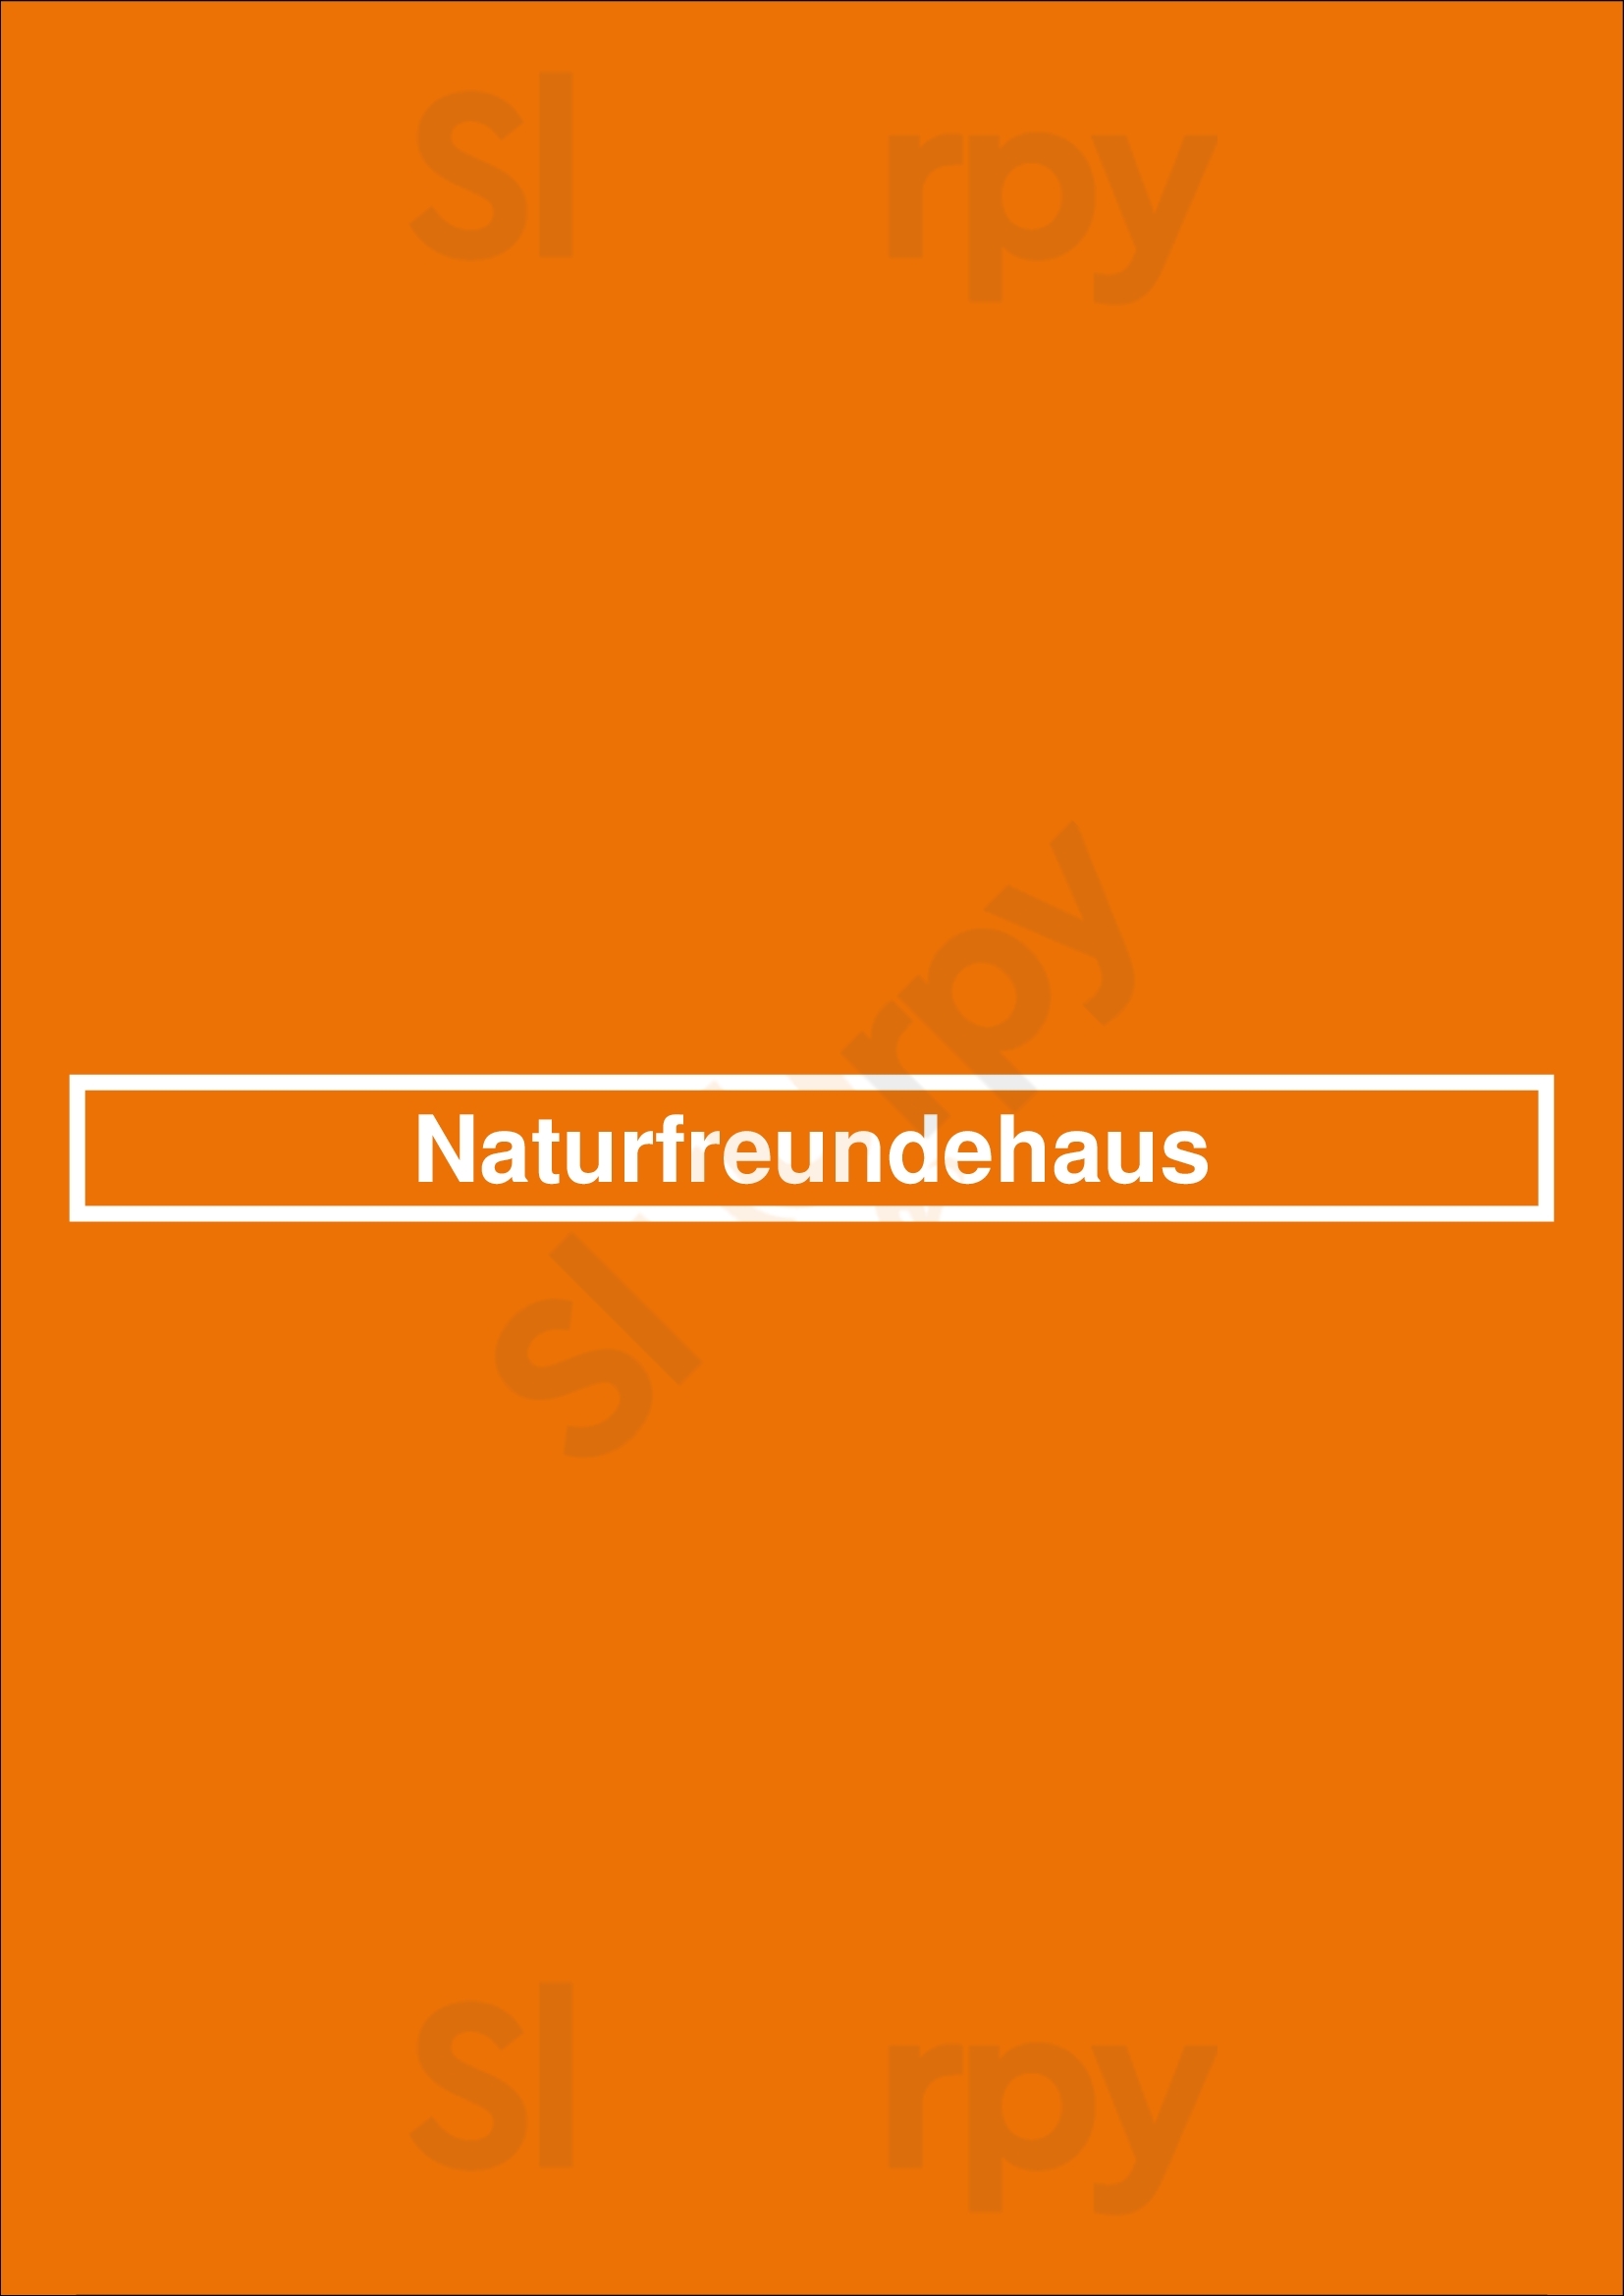 Naturfreundehaus Neu-Isenburg Menu - 1